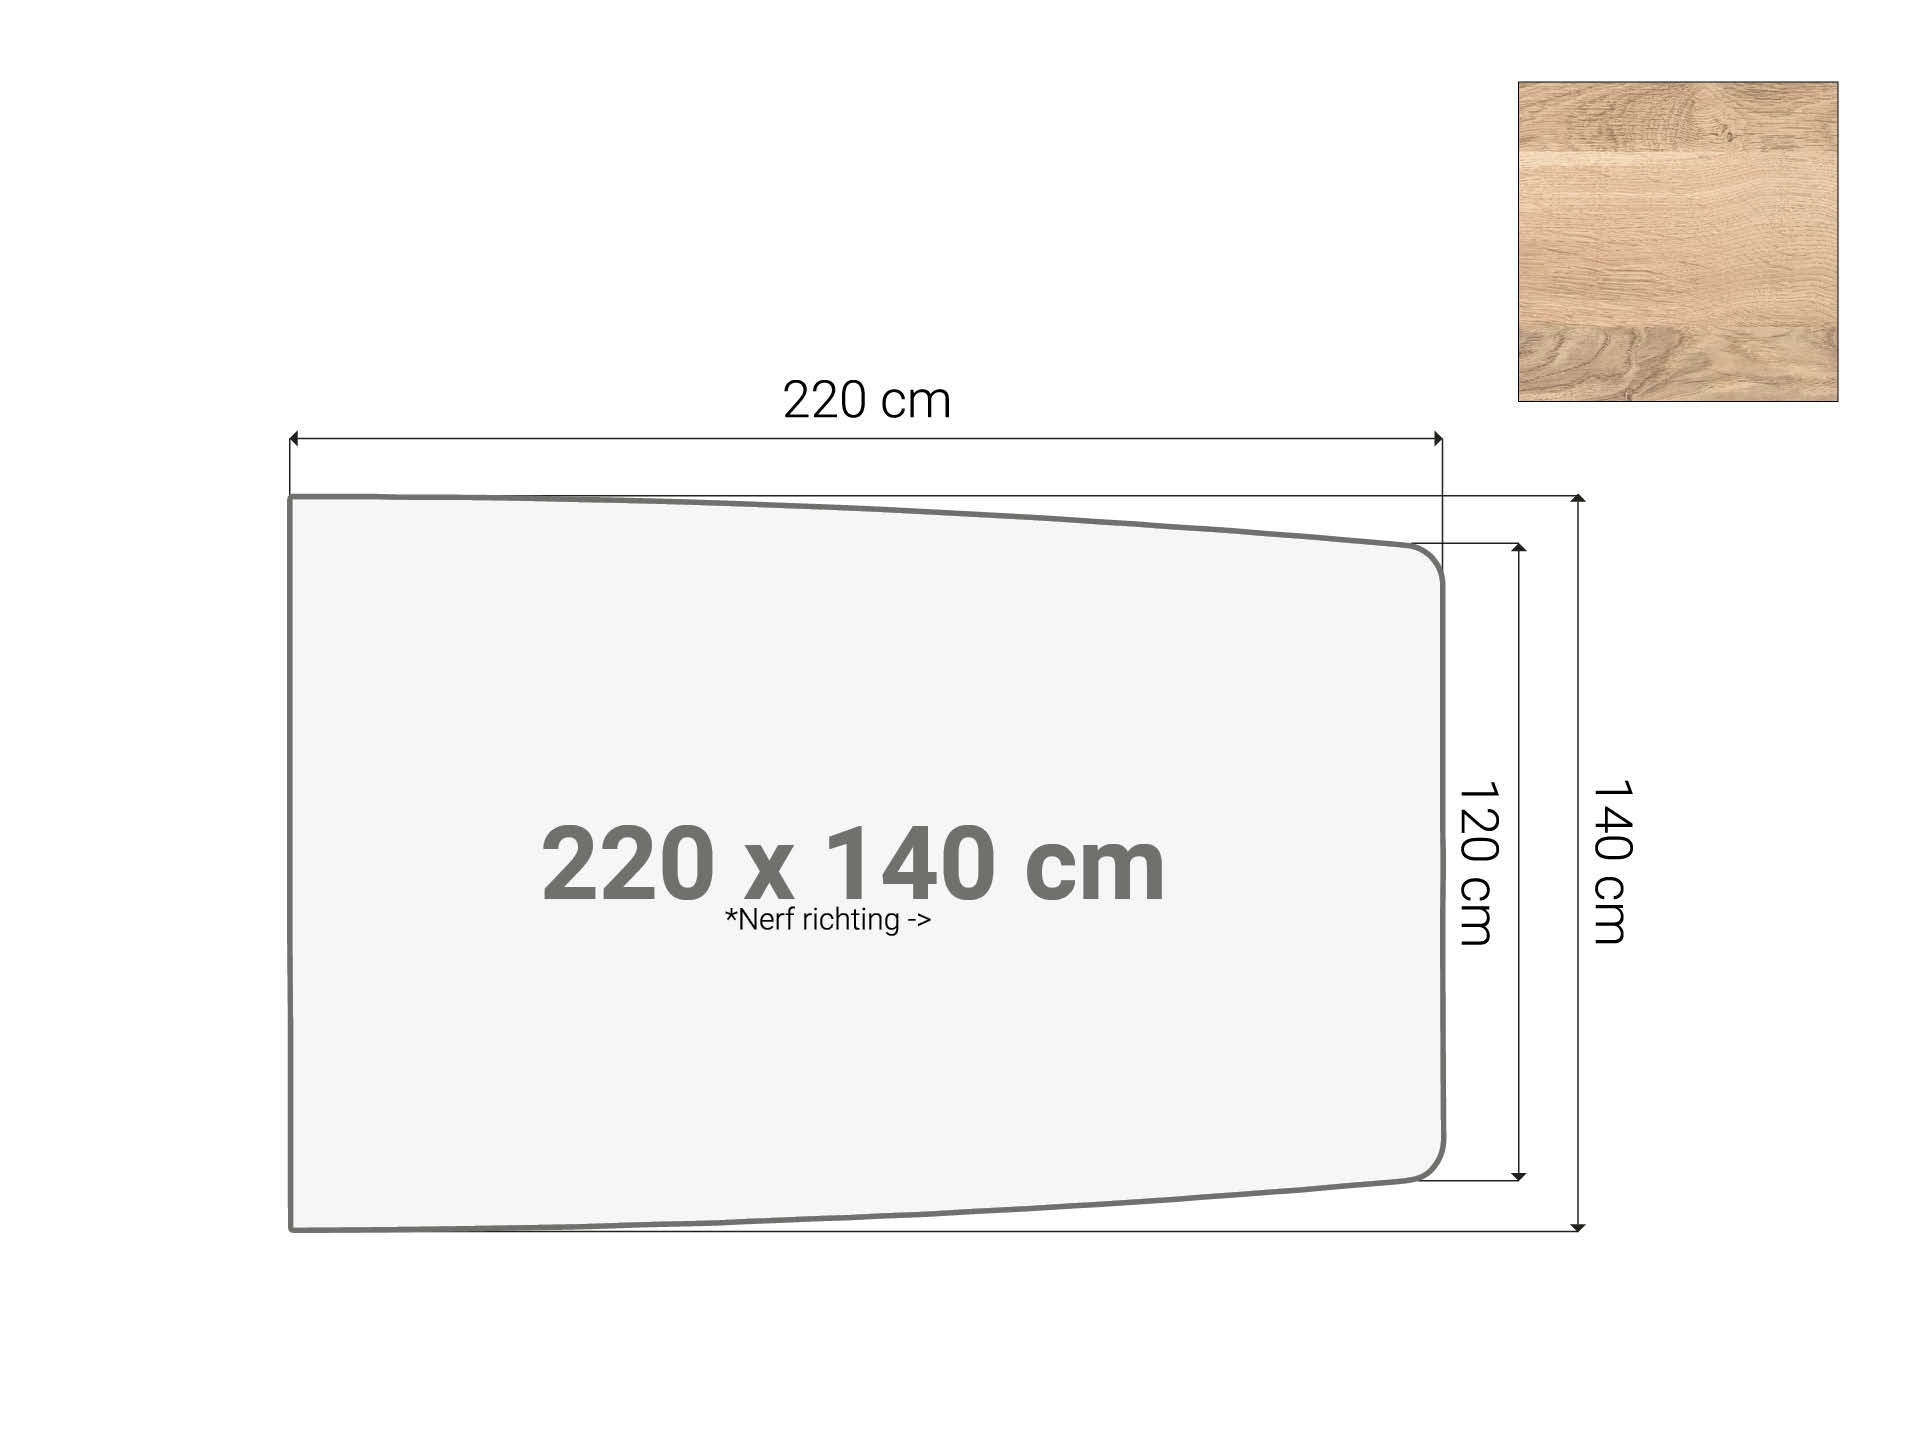 Half bootvormig vergadertafel blad Scandinavisch Eiken 220x140cm